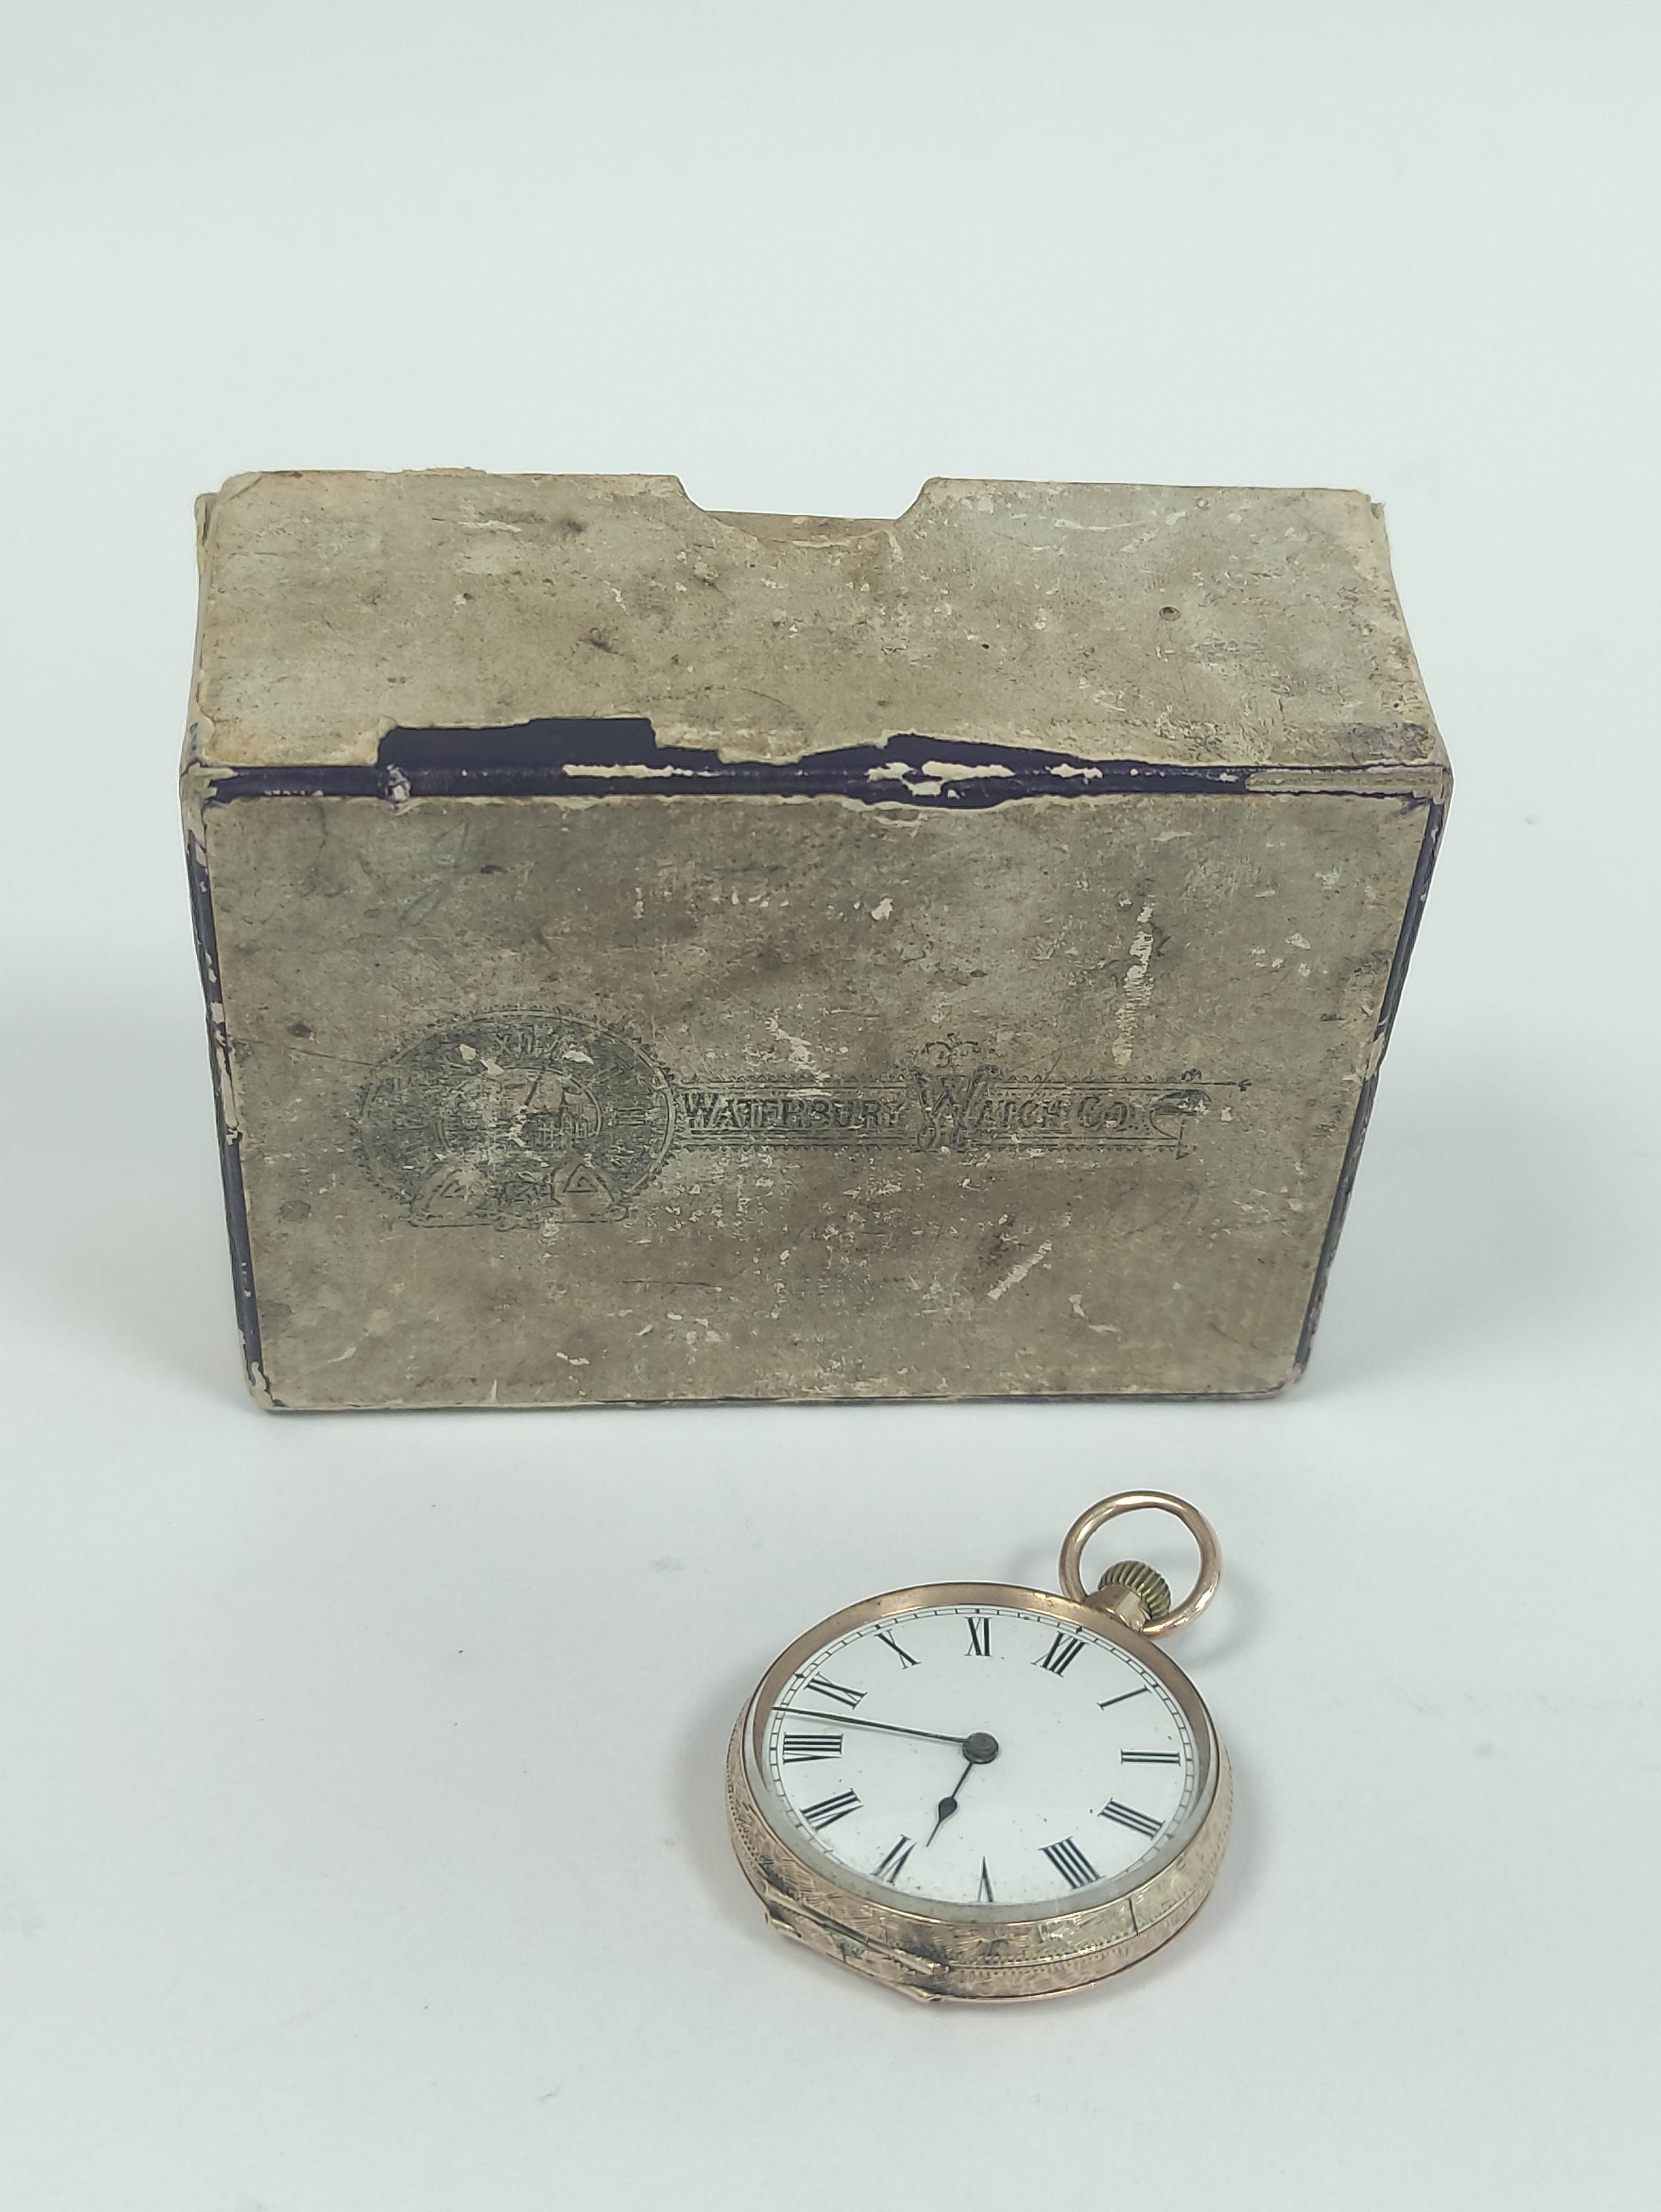 Geneva keyless cylinder watch in 9ct gold engraved case, 1907, 31mm, also a Waterbury watch box